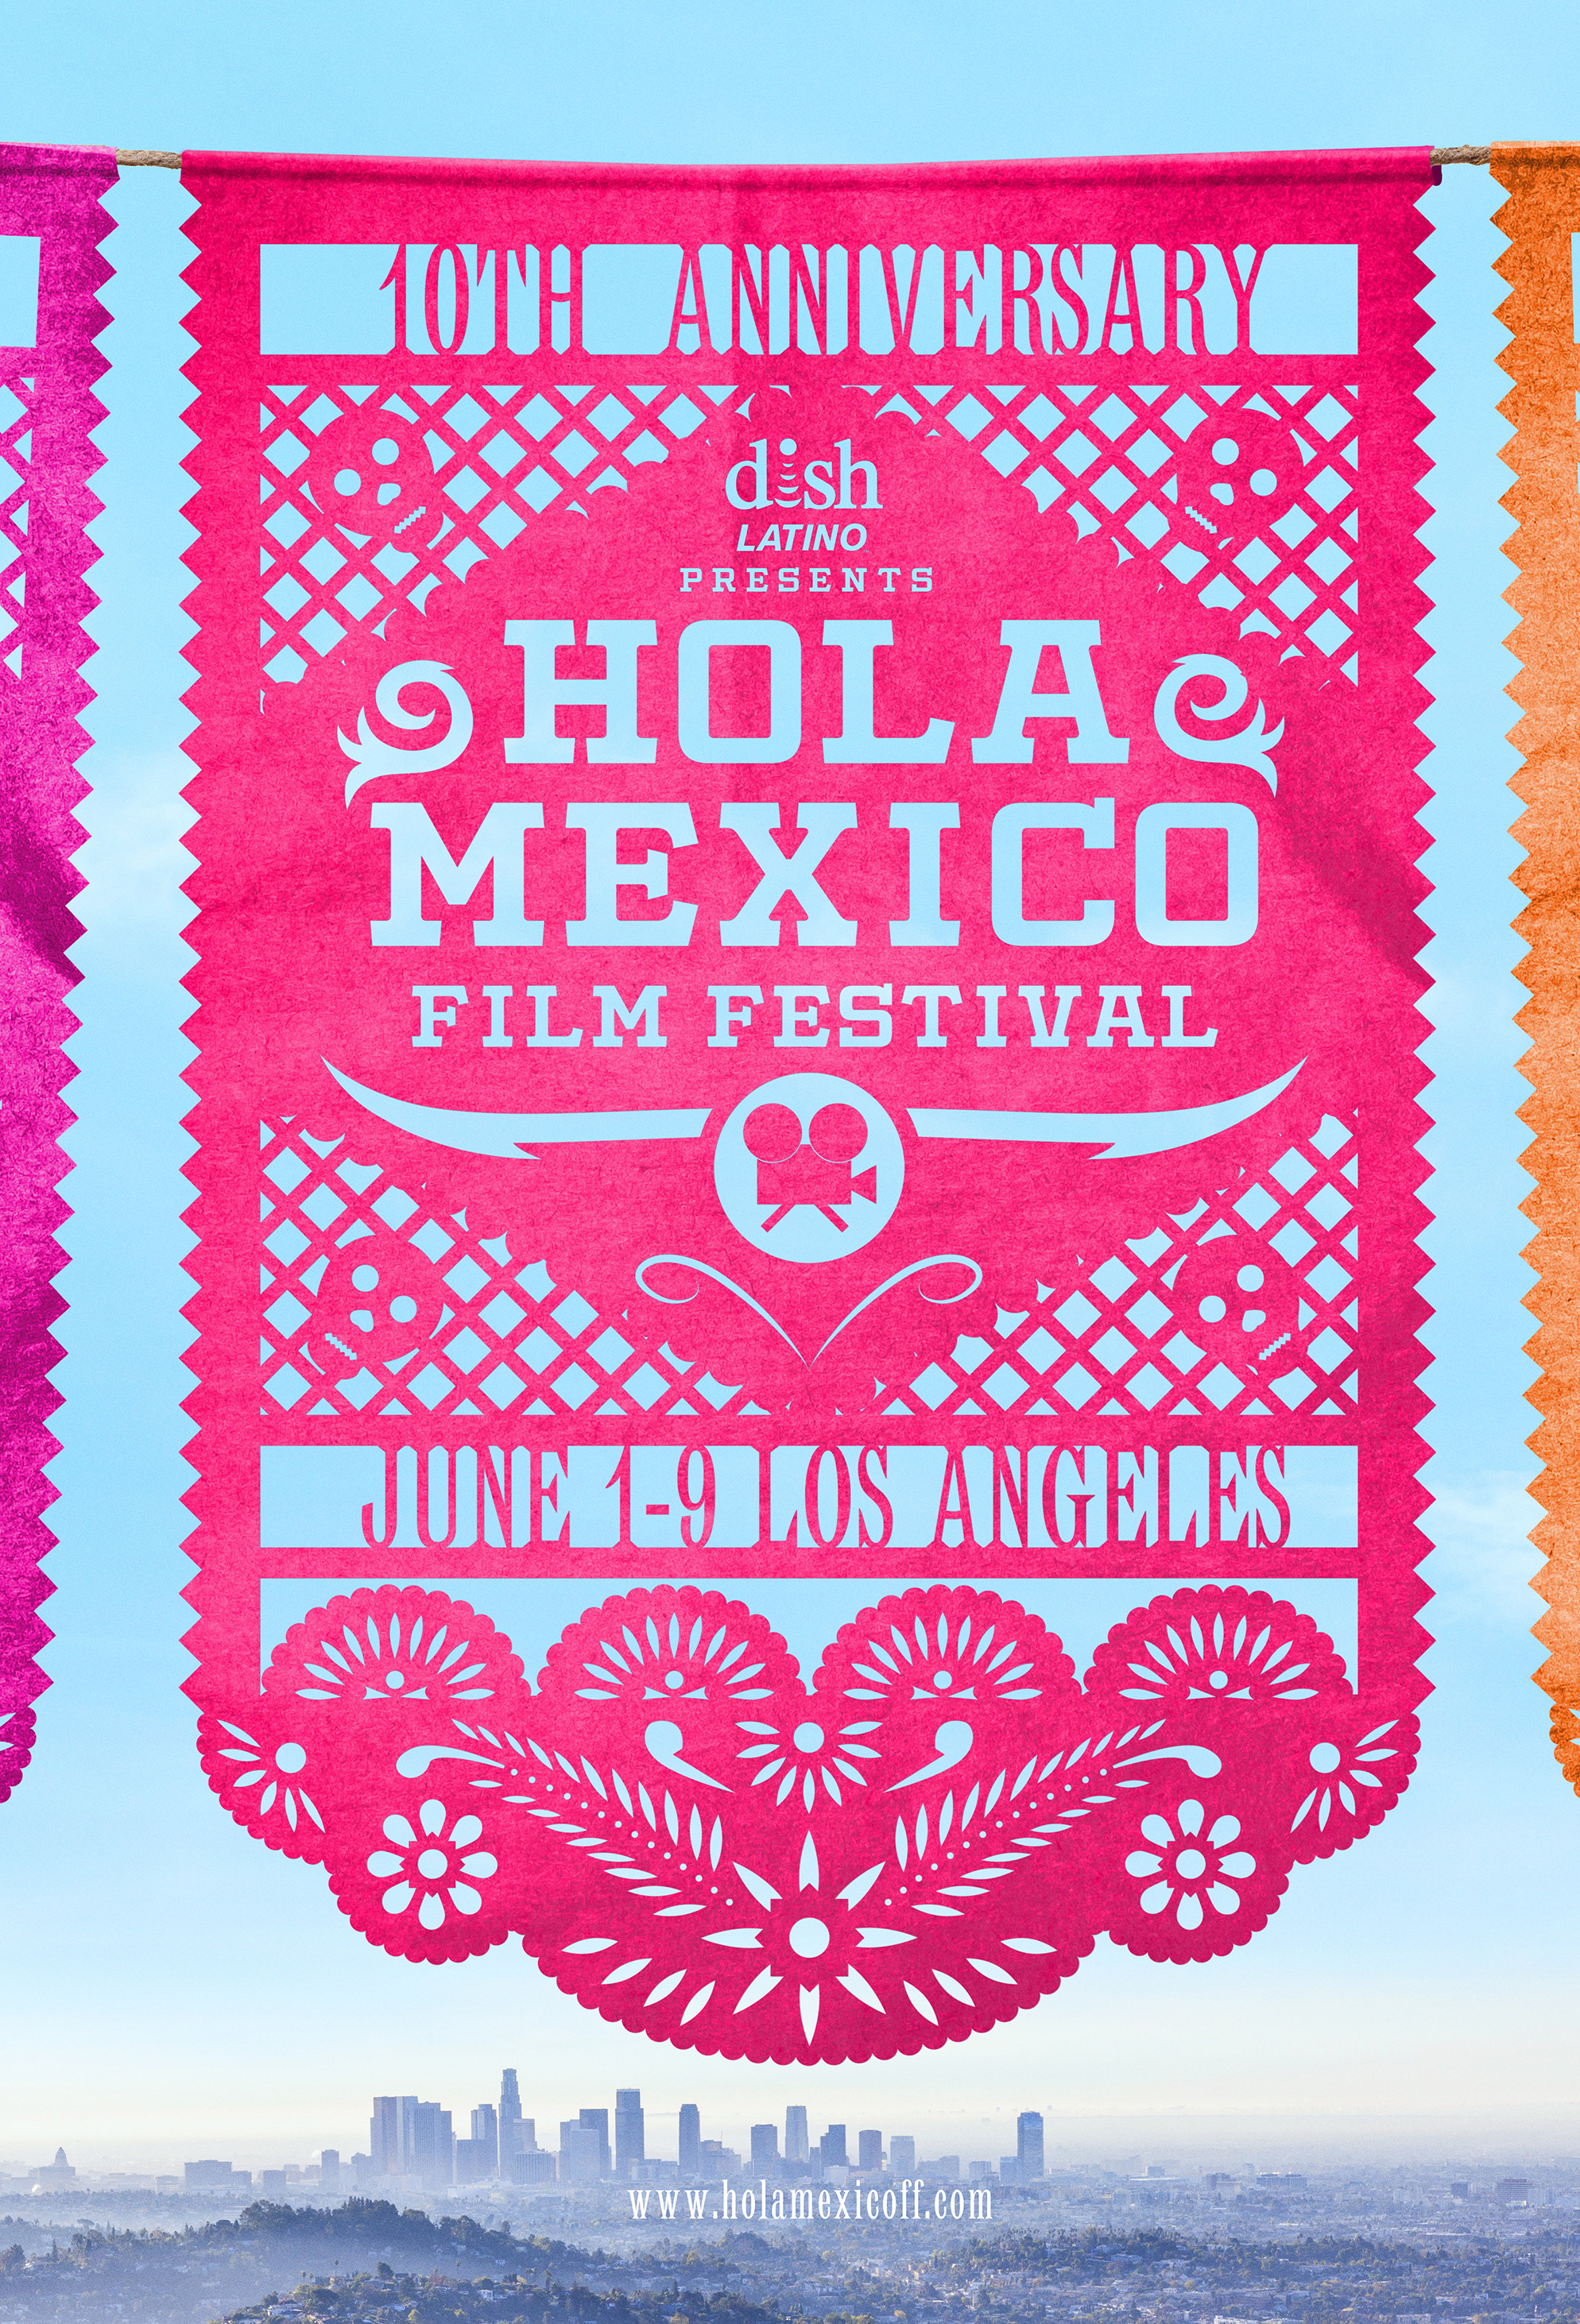 Mega Sized TV Poster Image for Hola Mexico Film Festival (#5 of 5)